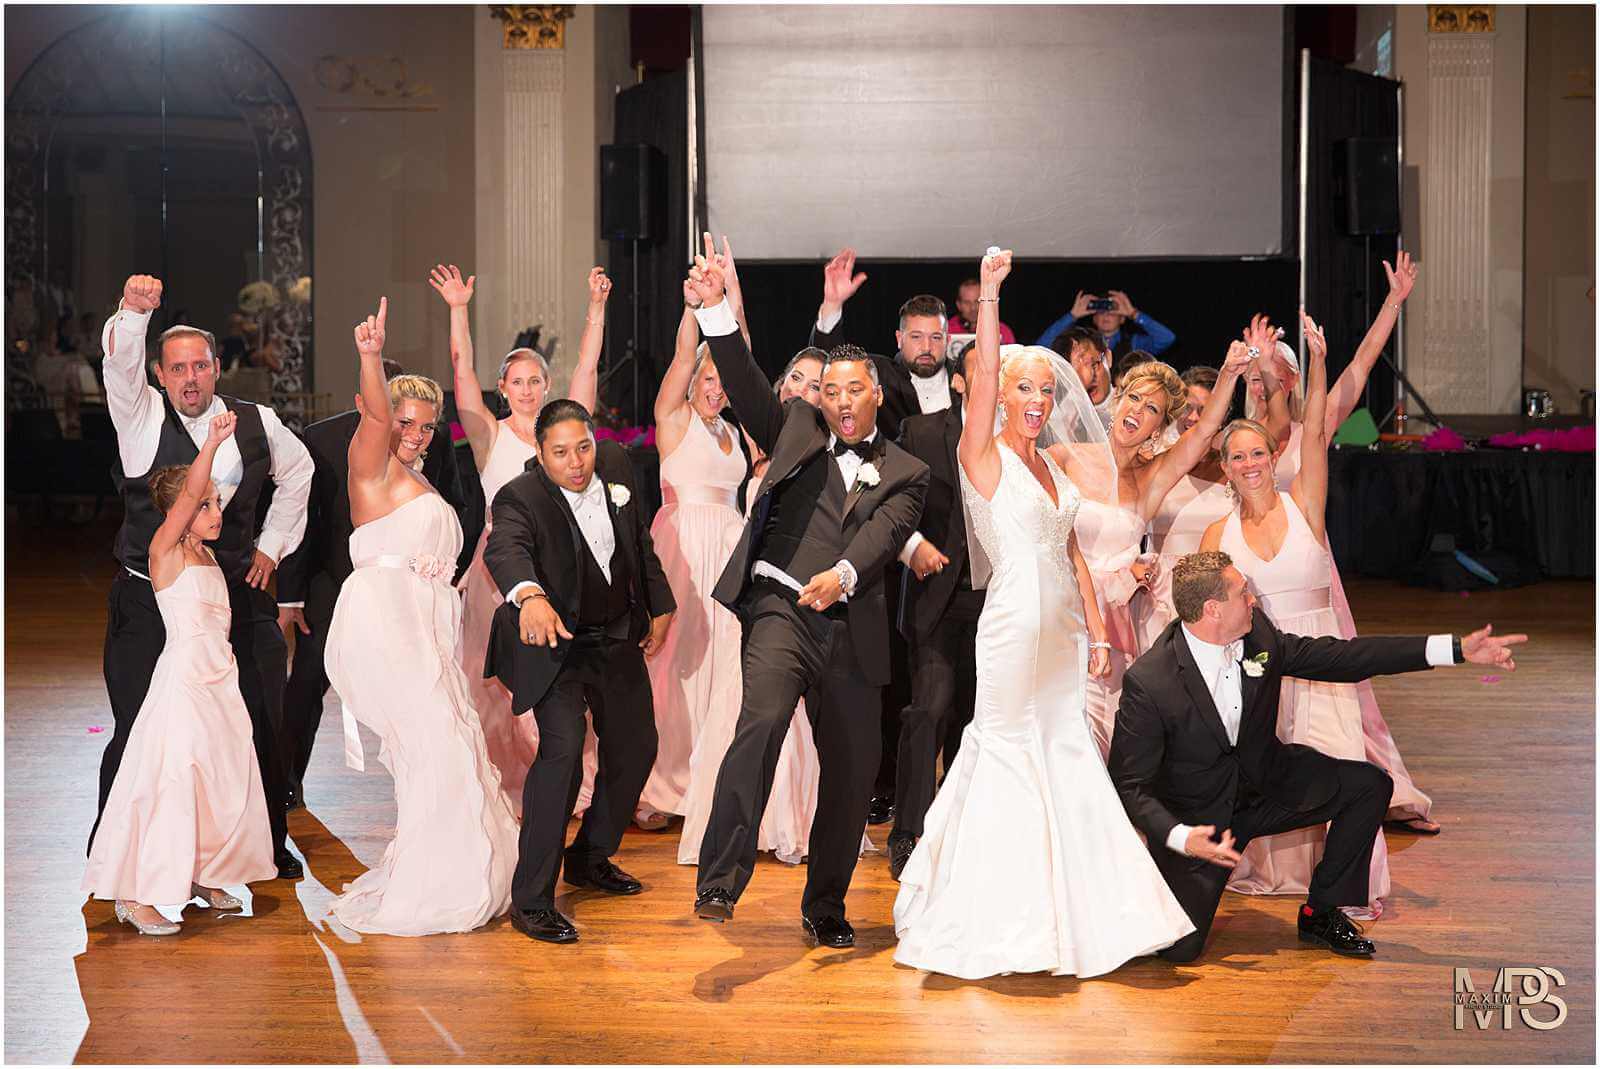 Cincinnati Music Hall wedding reception